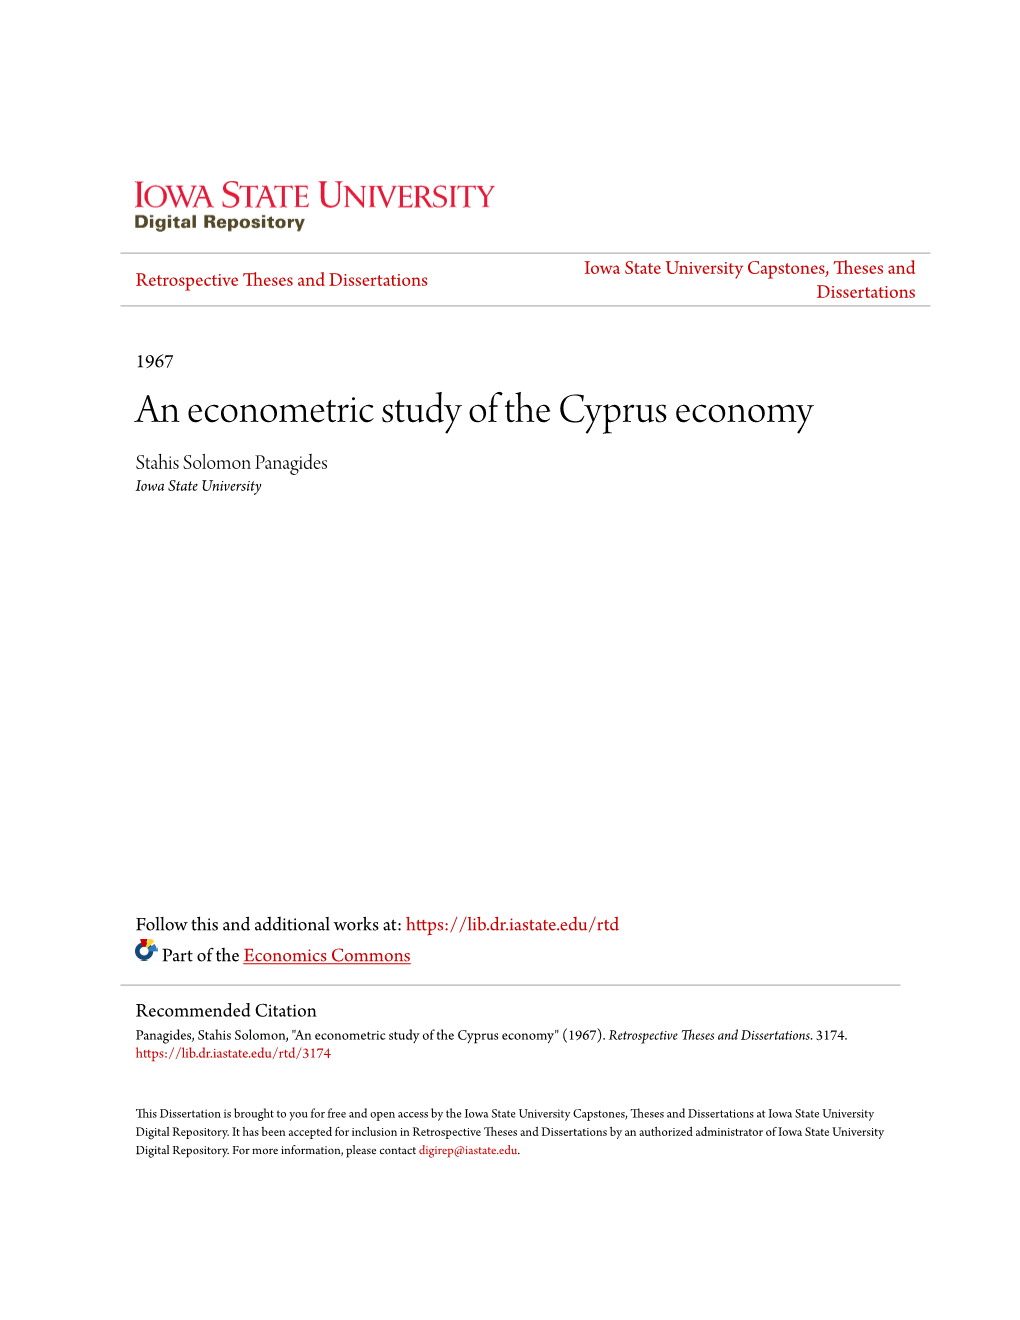 An Econometric Study of the Cyprus Economy Stahis Solomon Panagides Iowa State University